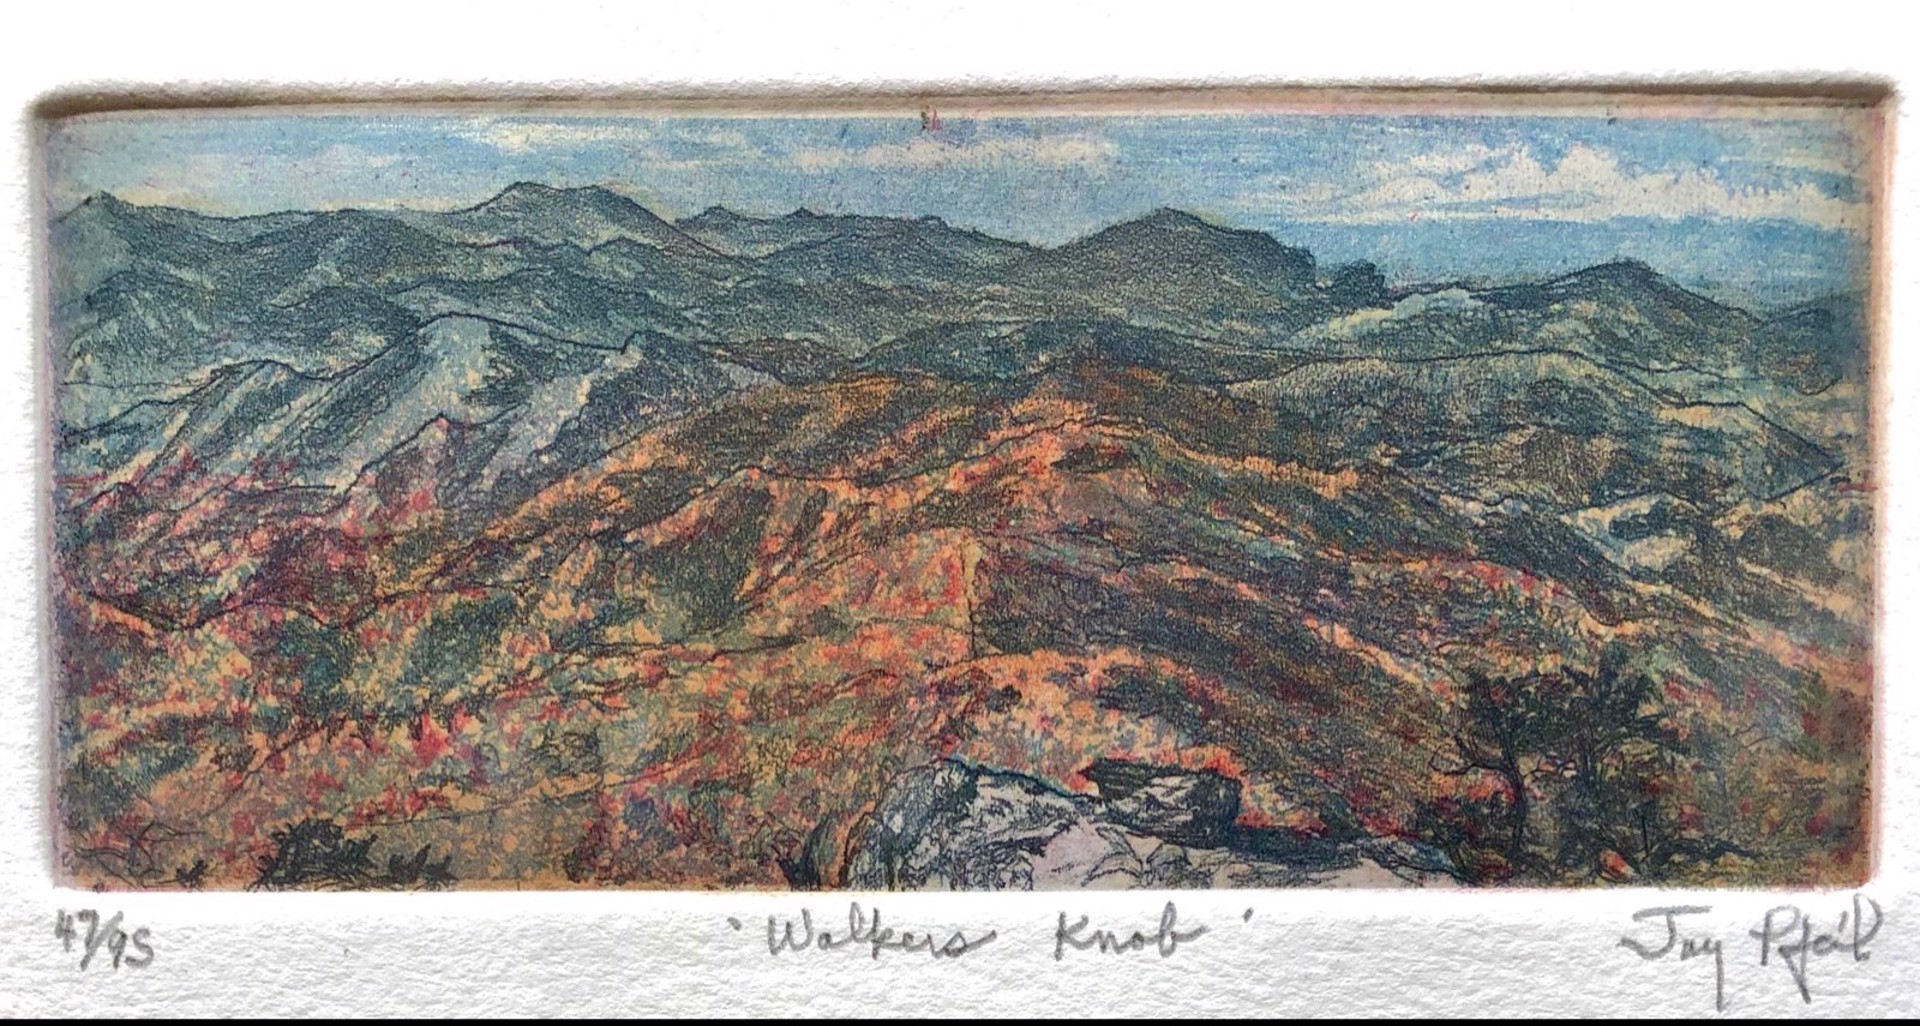 Walkers Knob (Mount Mitchell) by Jay Pfeil